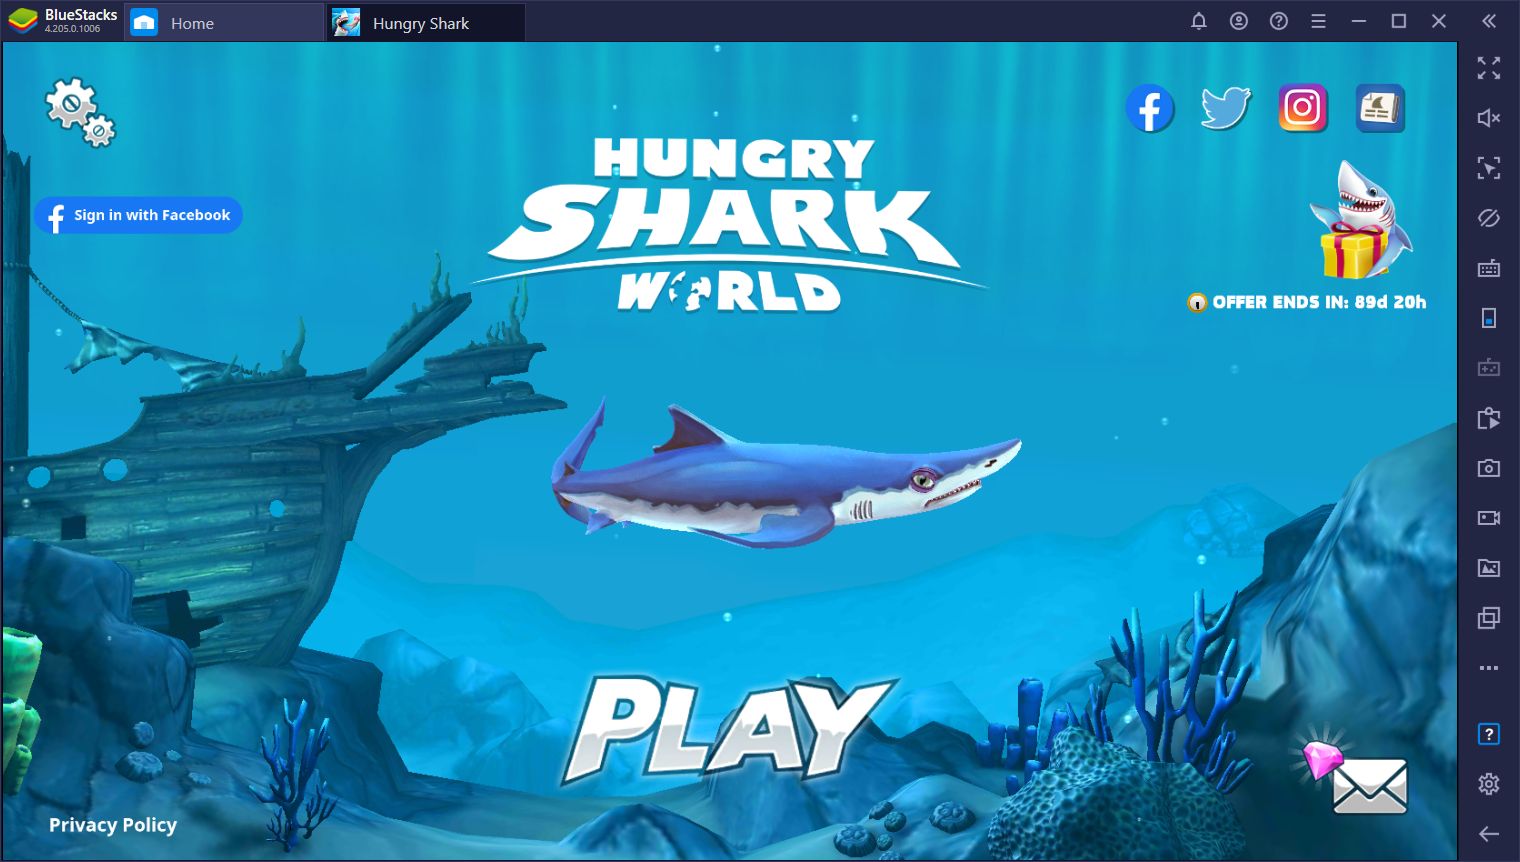 Hungry Shark World - Beginner’s Guide for Getting Started